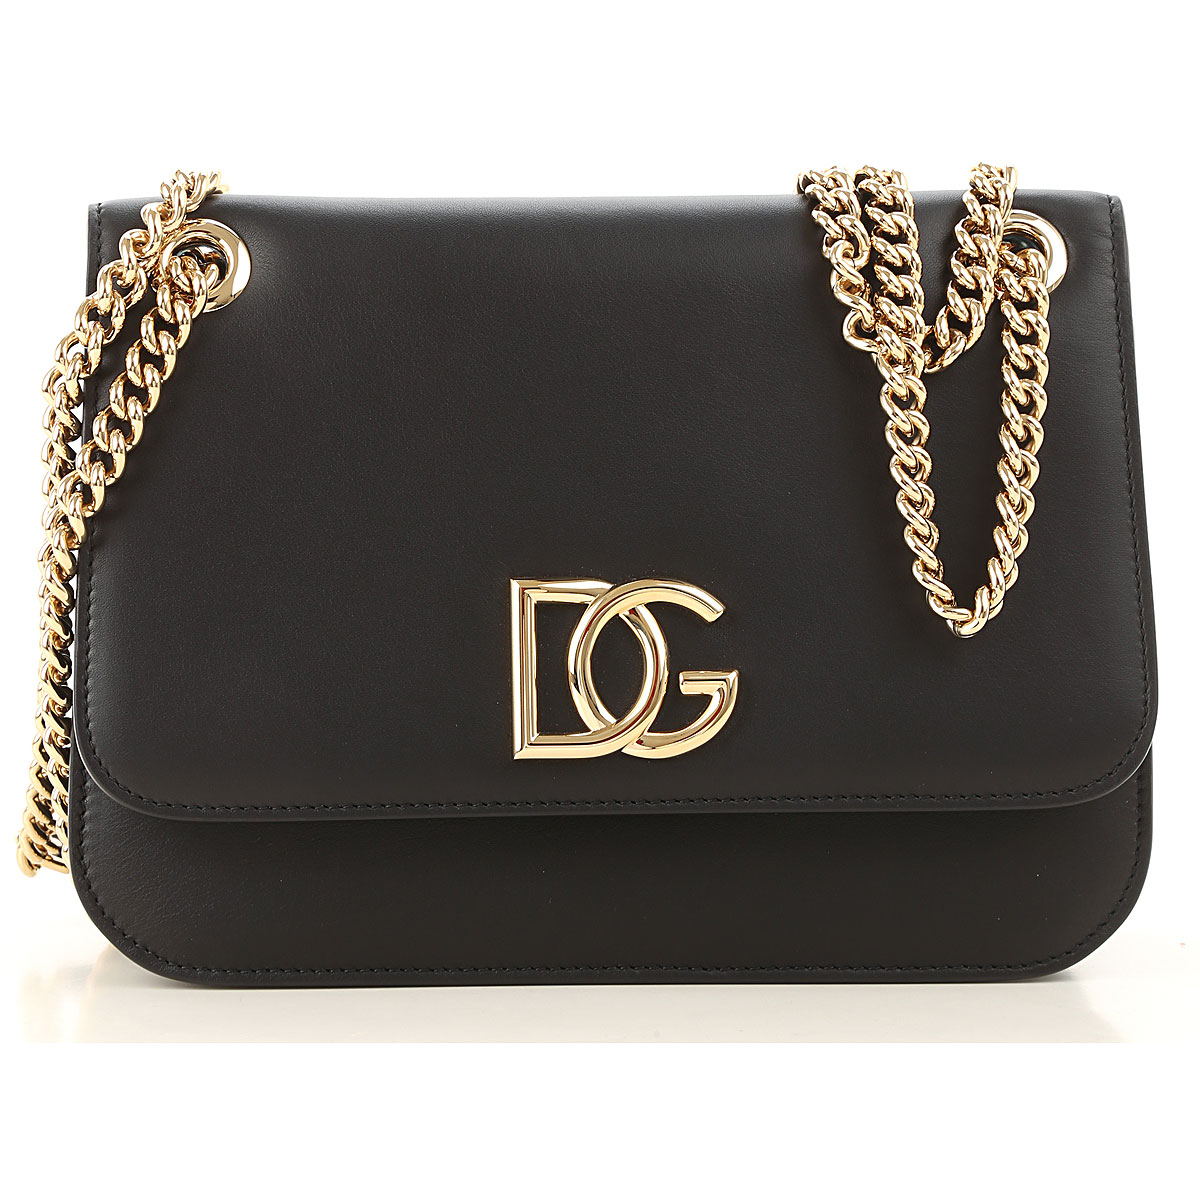 Handbags Dolce & Gabbana, Style code: bb6795-ax441-80999